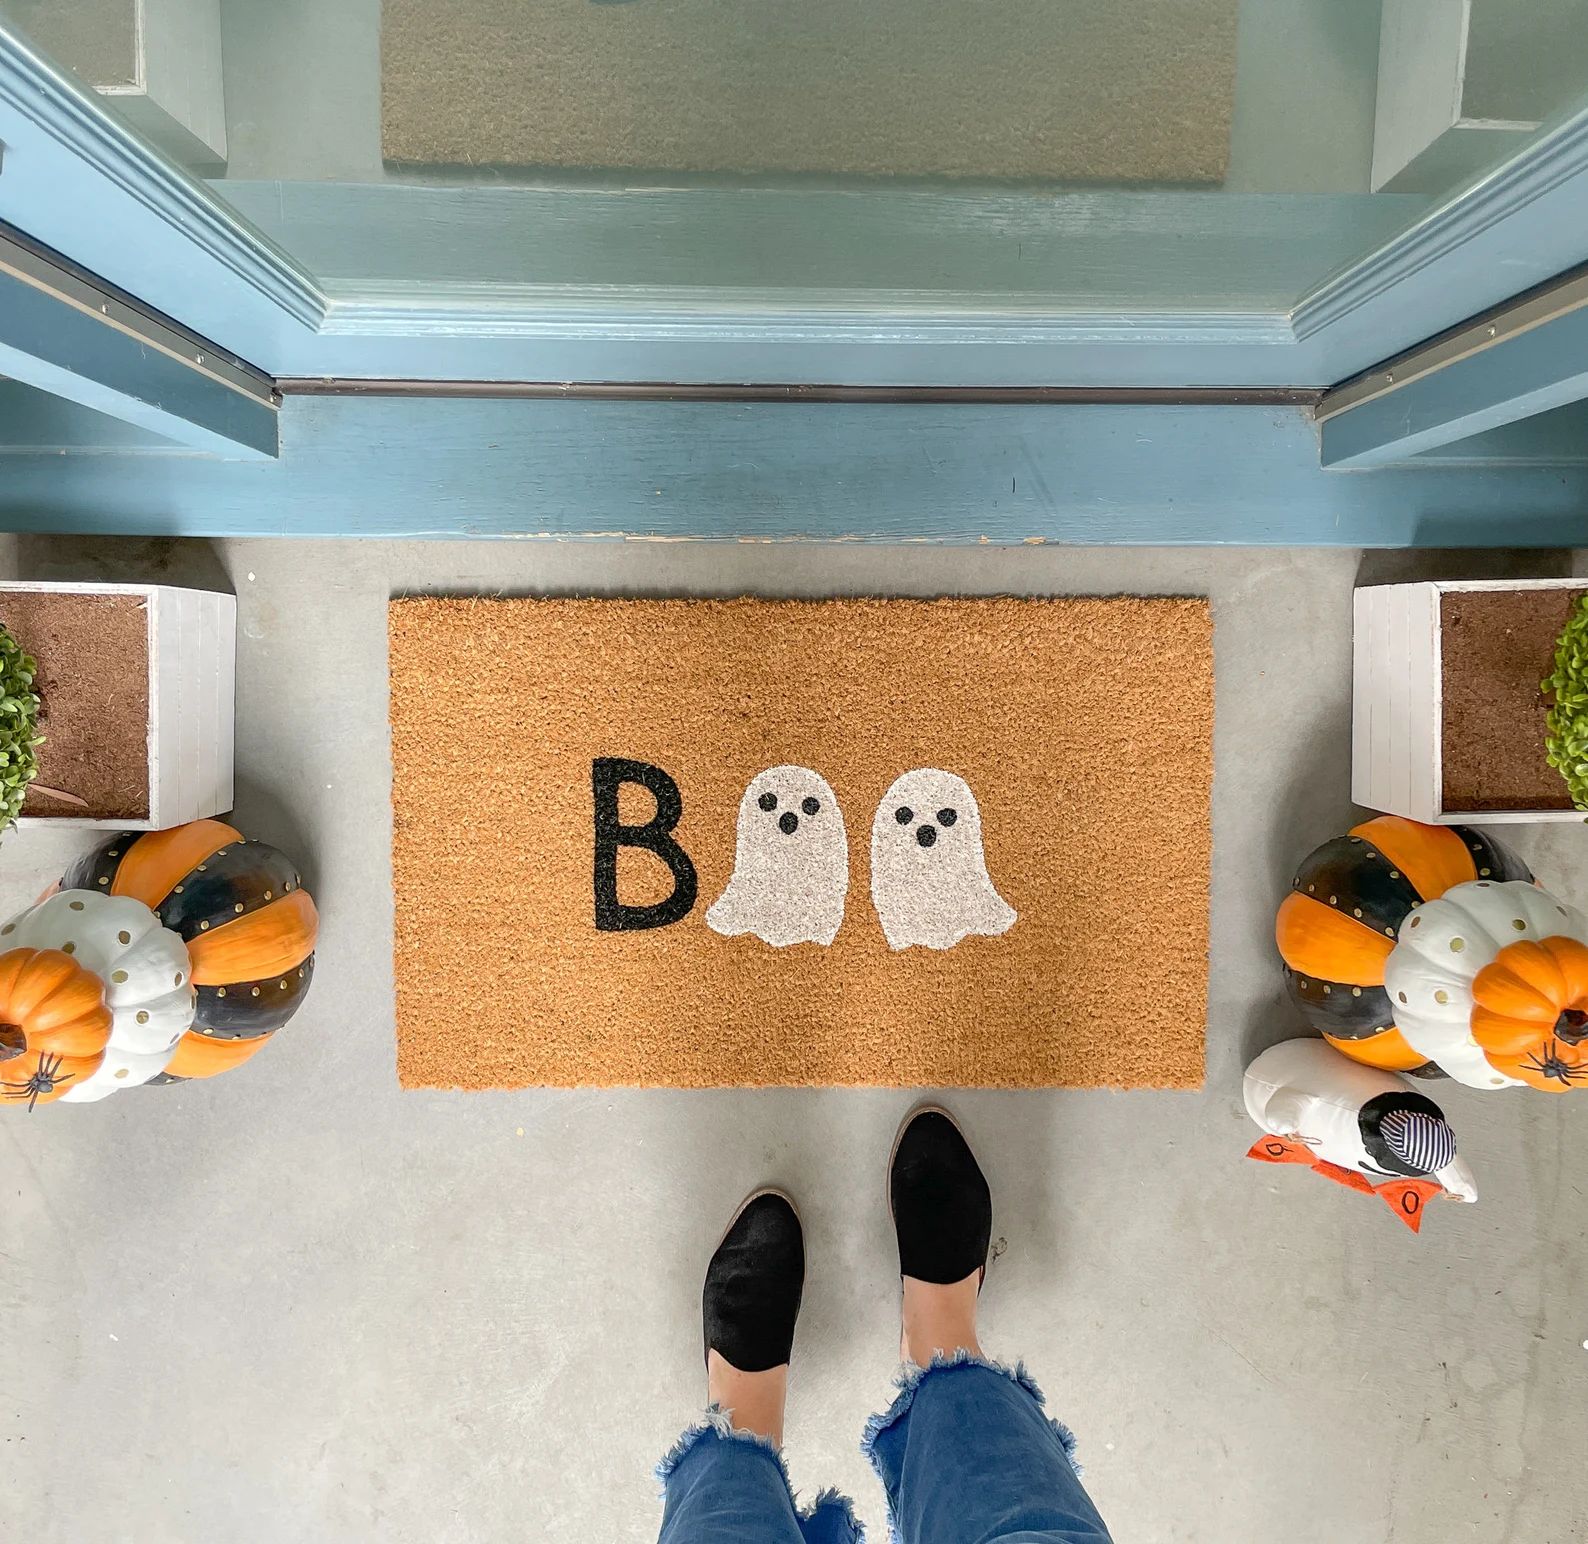 Halloween Doormat Ghost Doormat Ghost Decor for Porch - Etsy | Etsy (US)